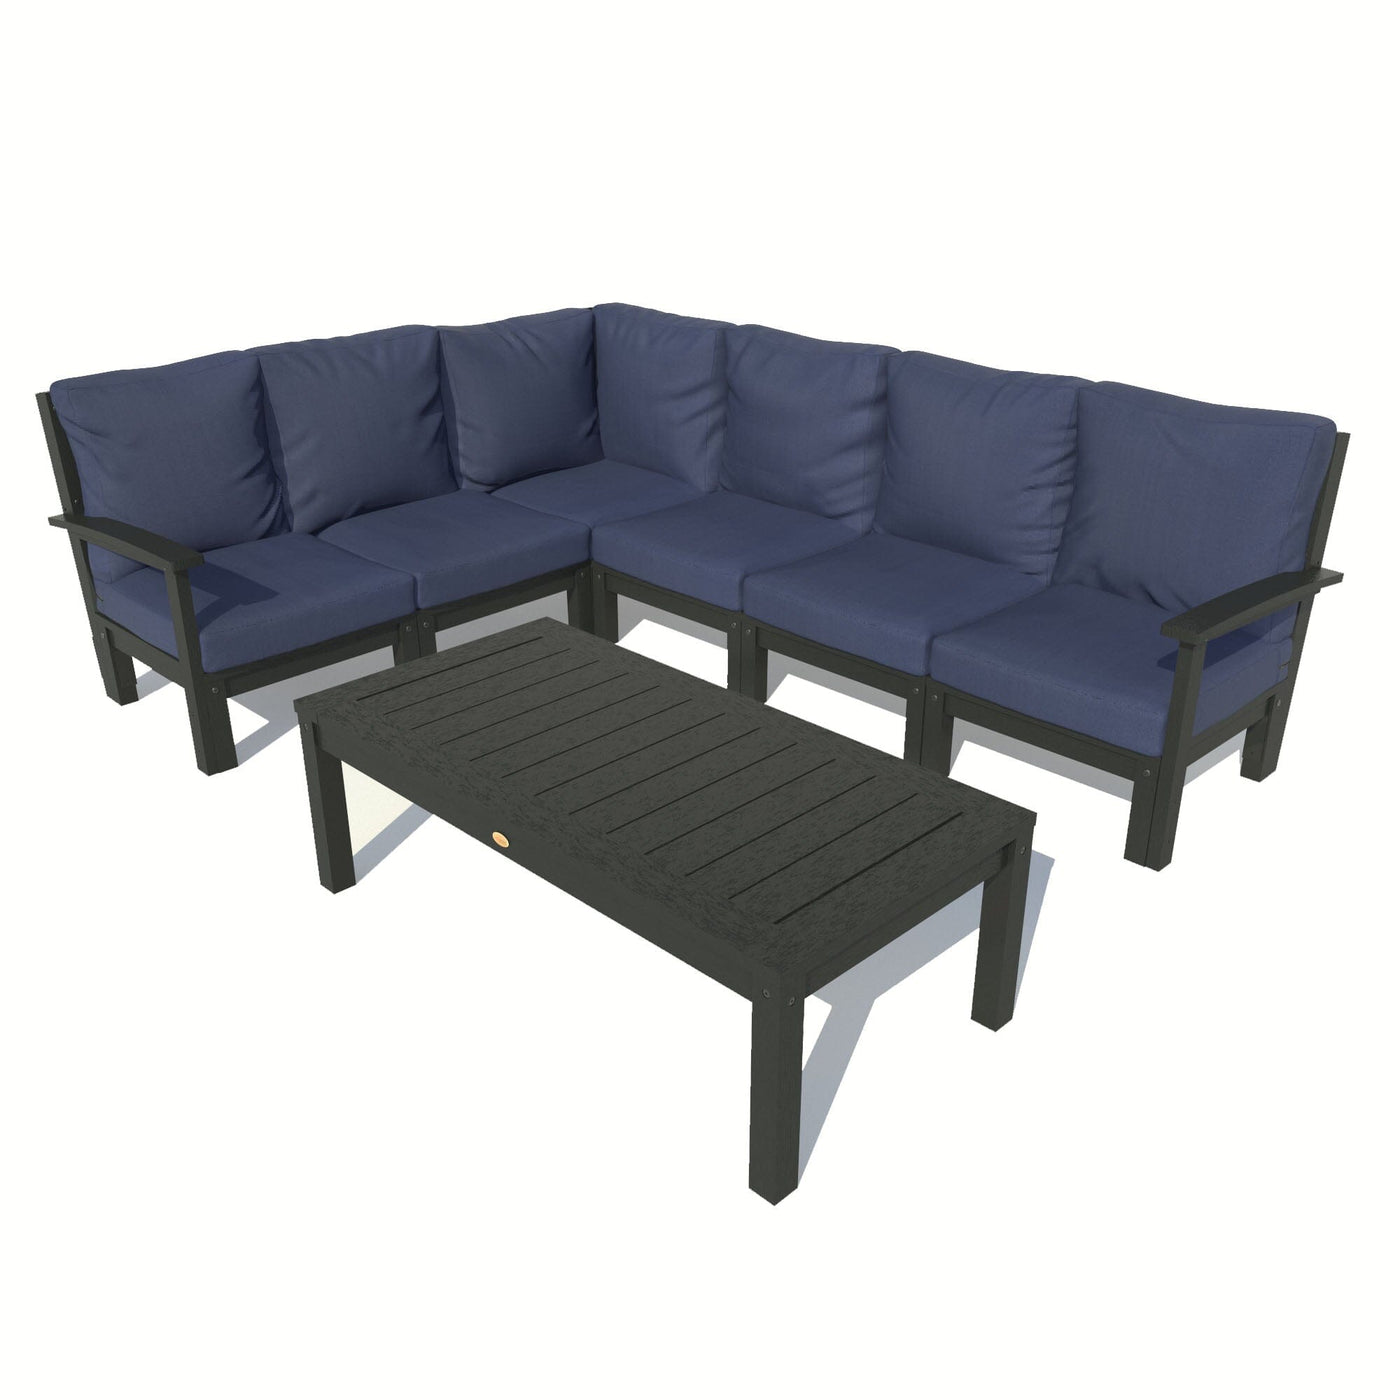 Bespoke Deep Seating: 7 Piece Sectional Sofa Set with Conversation Table Deep Seating Highwood USA Navy Black 